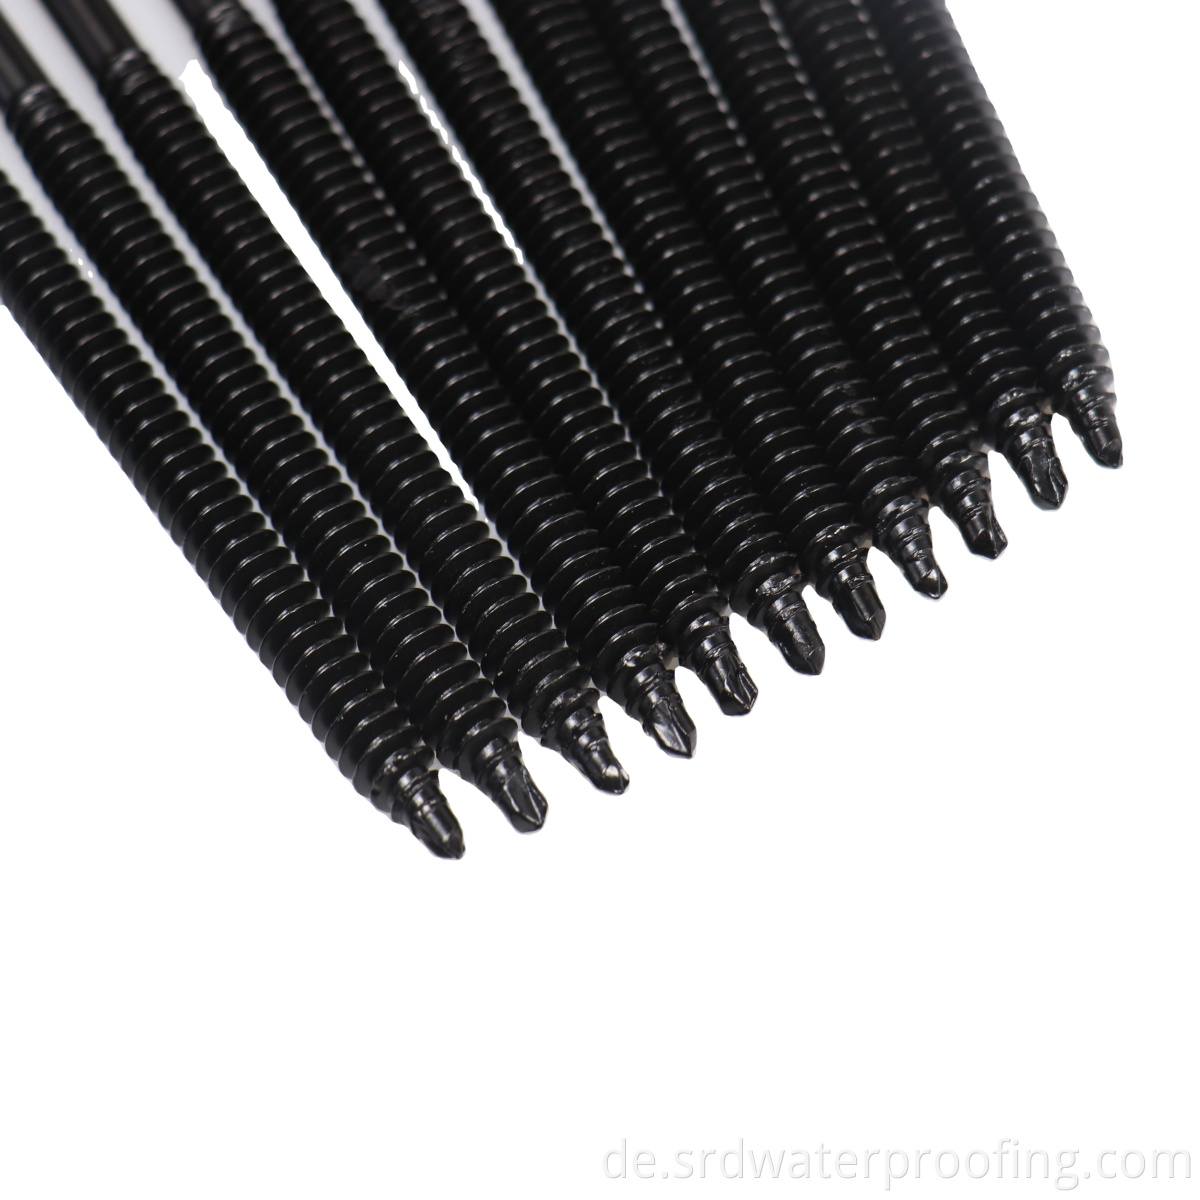  black Roofing philip screws